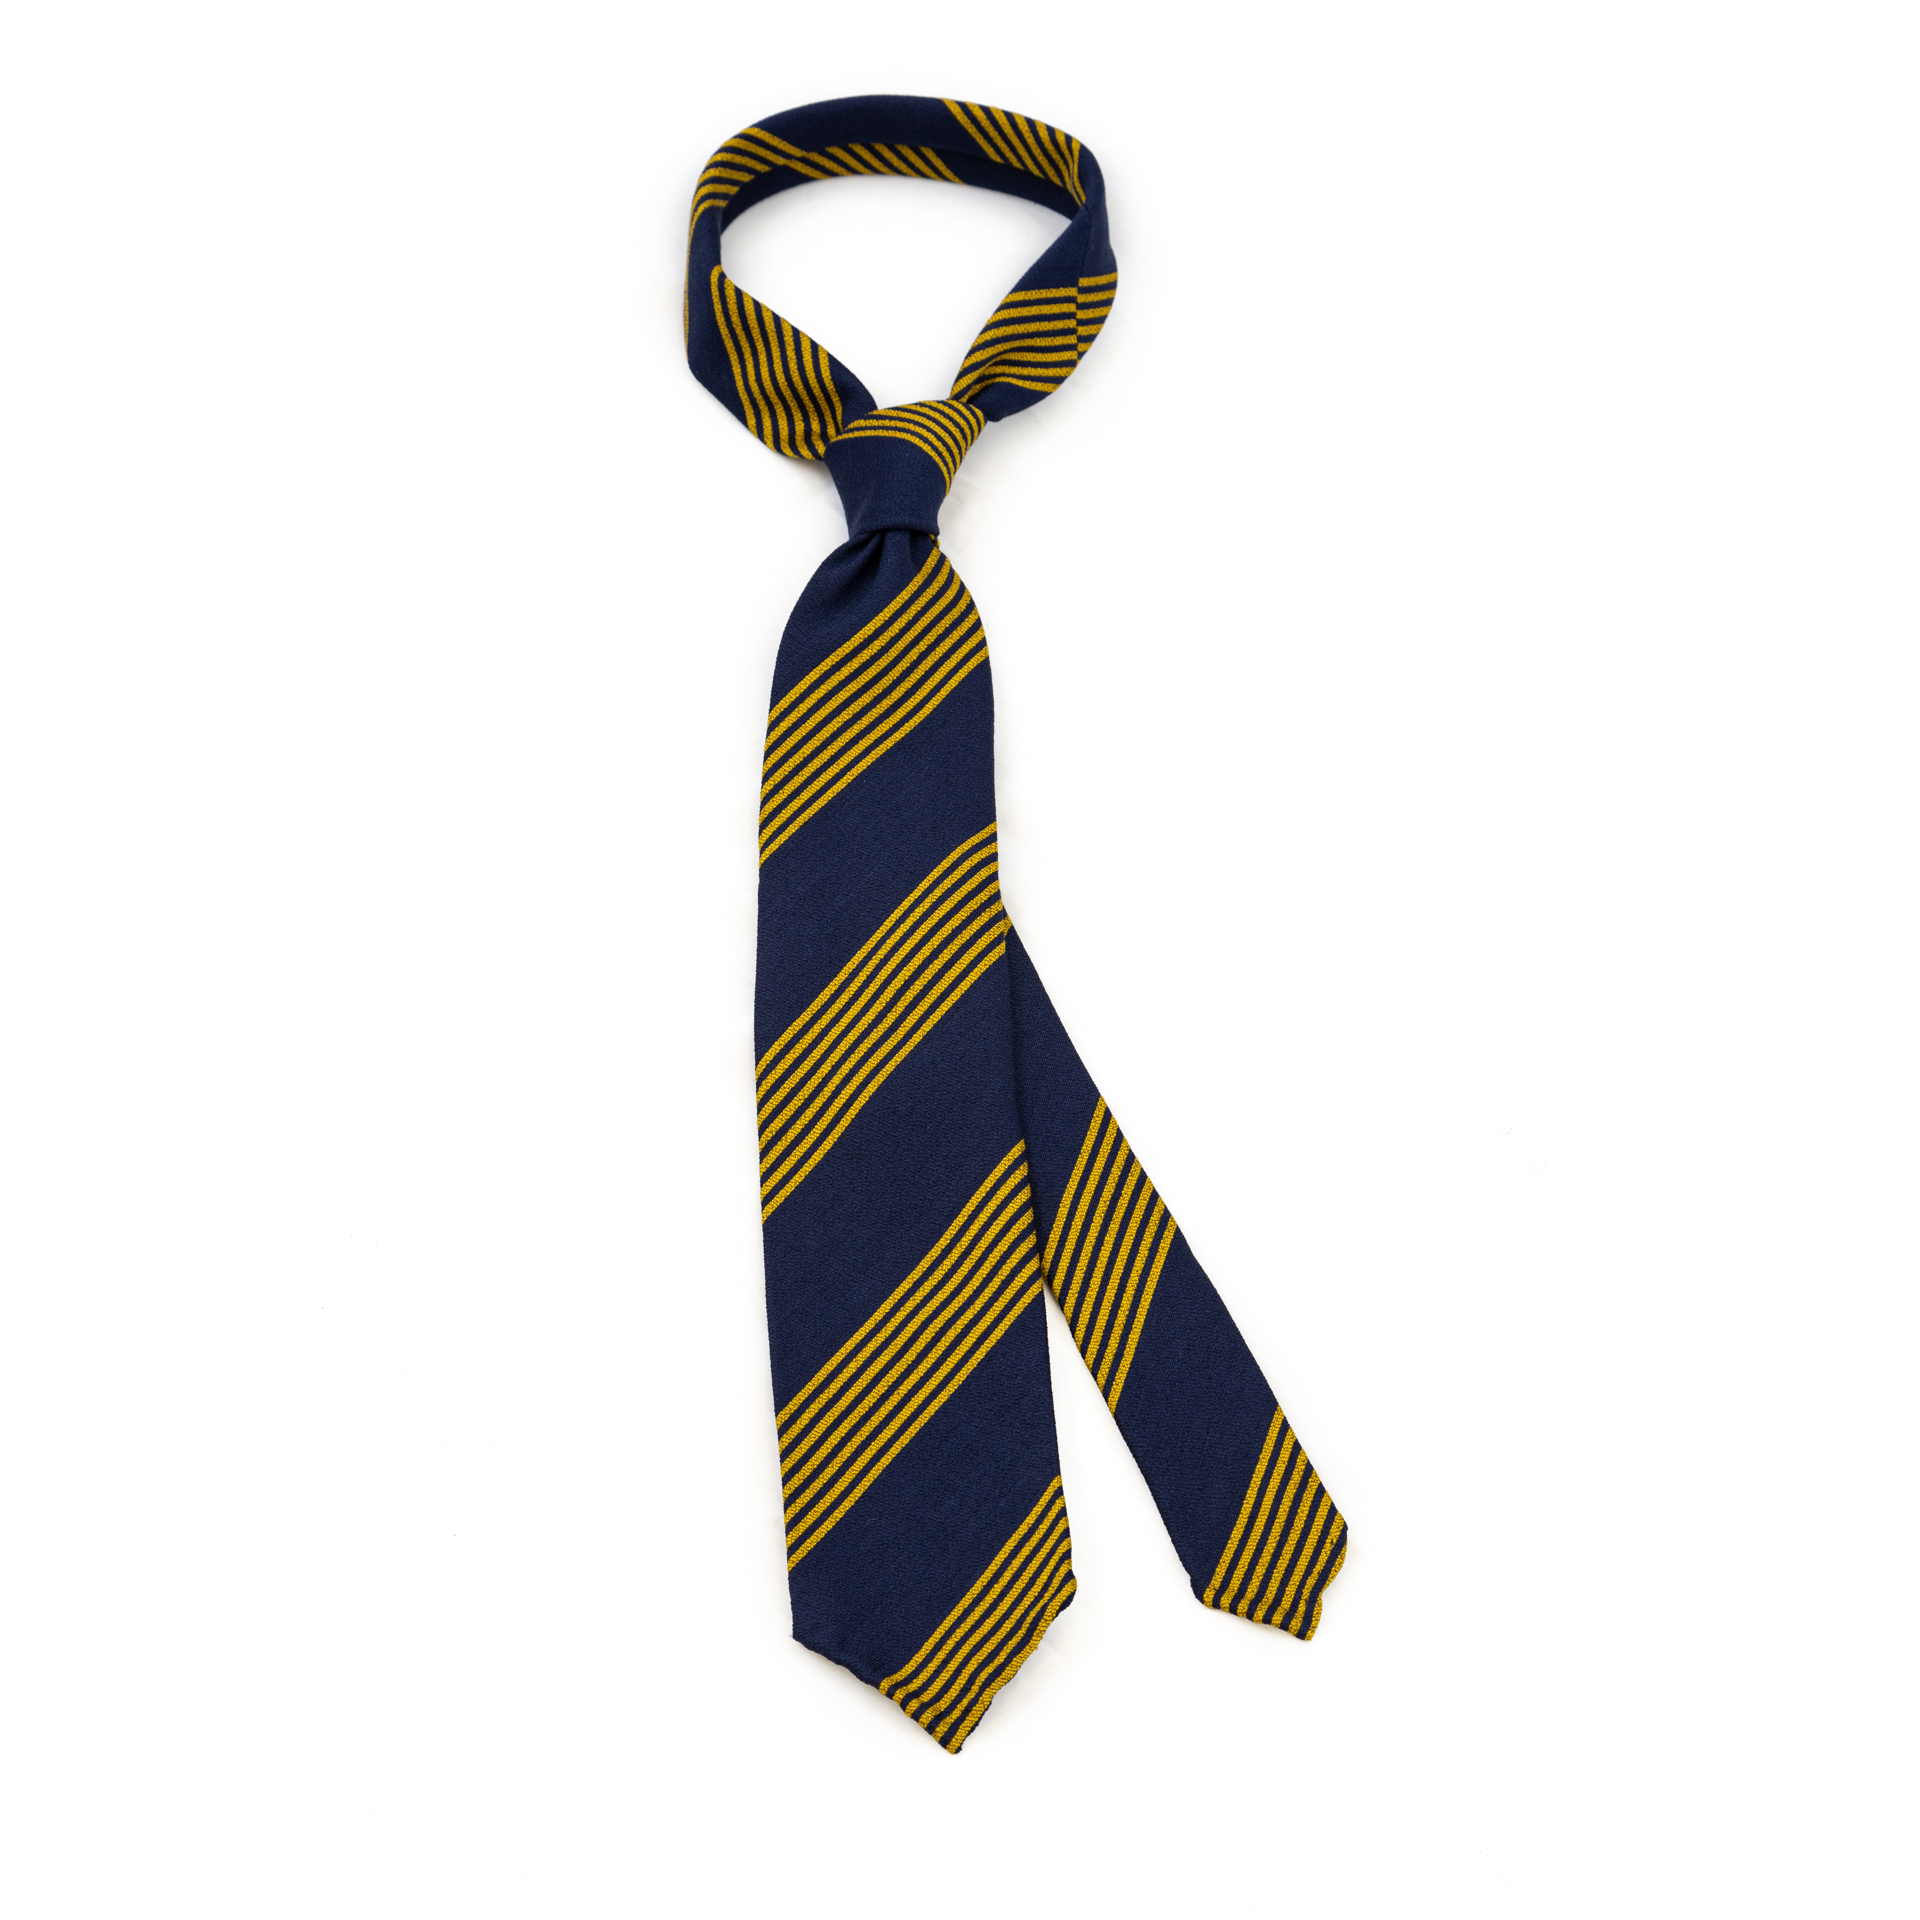 DLA 5-fold navy and yellow striped tie